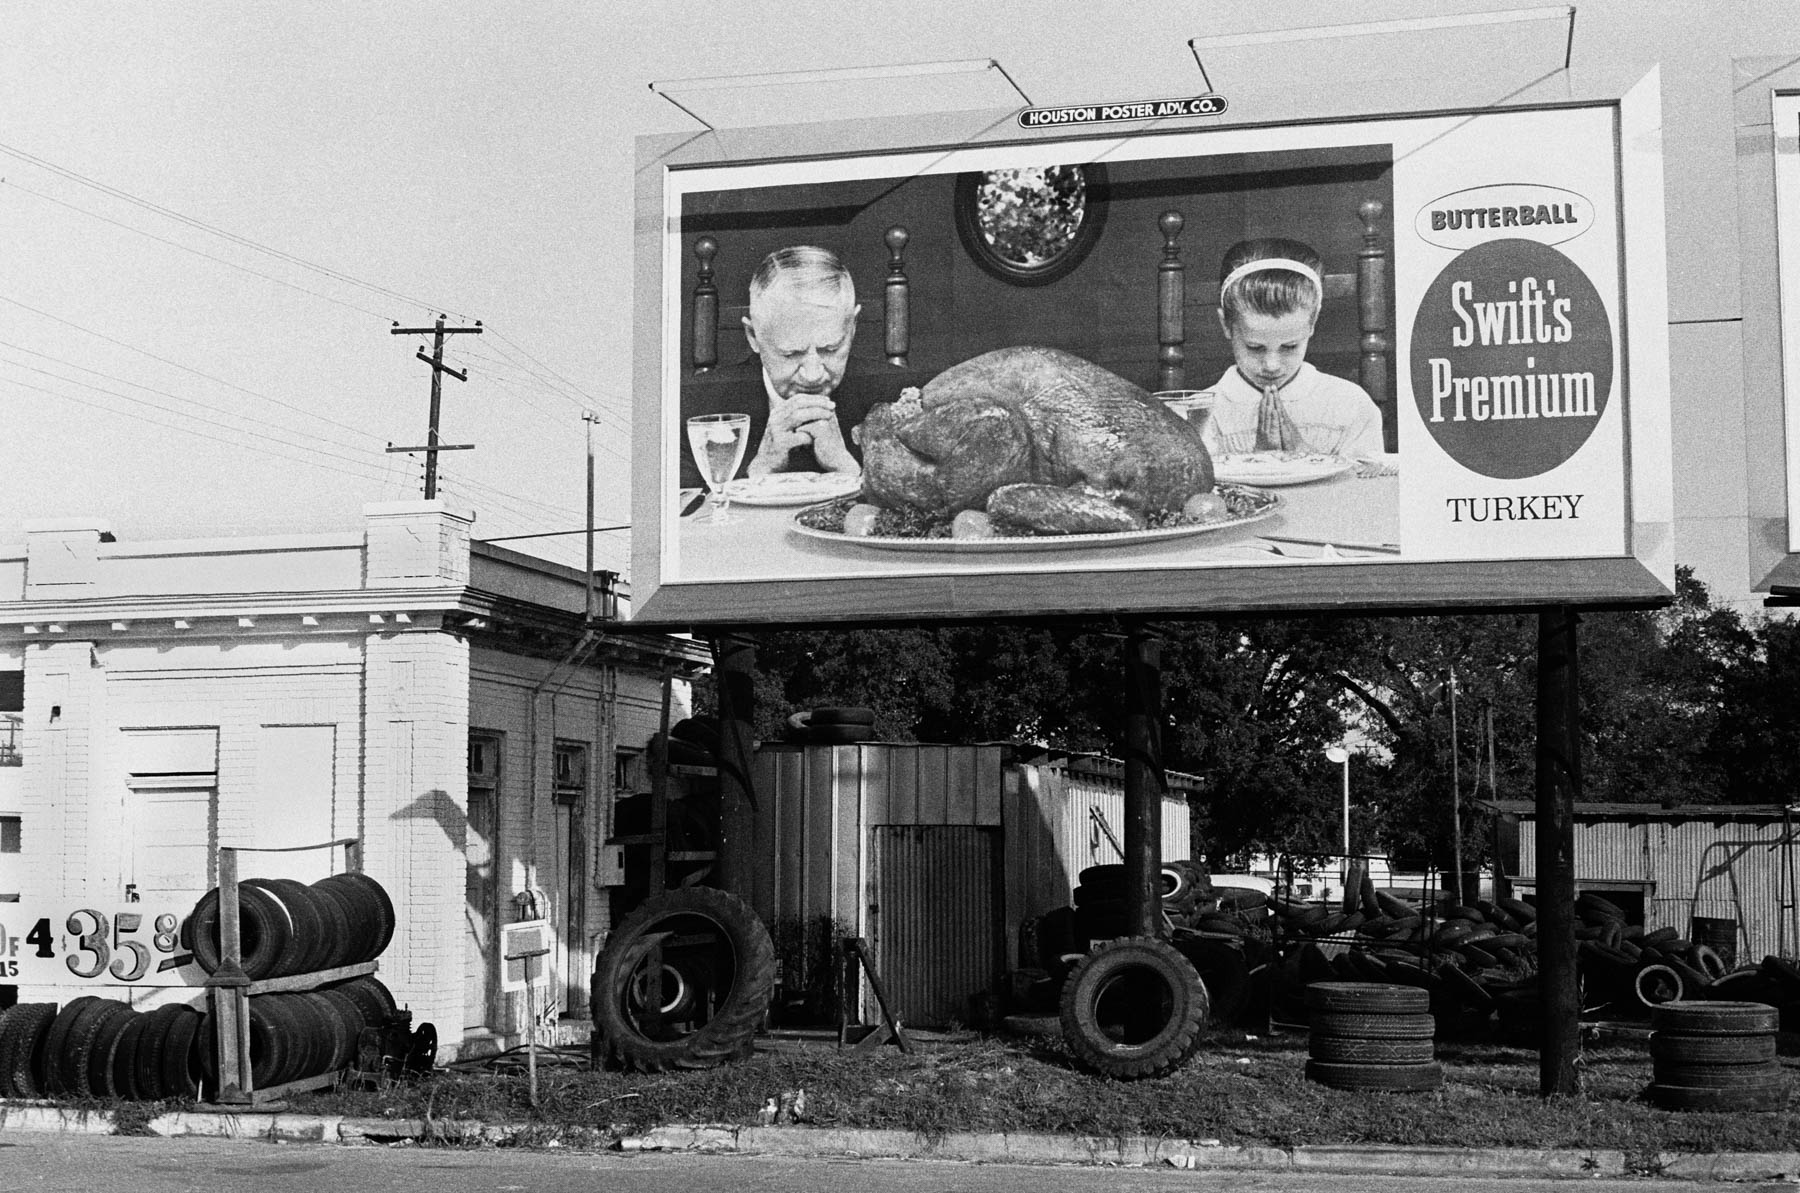 Thomas Hoepker, USA, Houston, Texas. 1963, Billboard, ad for swift's turkey